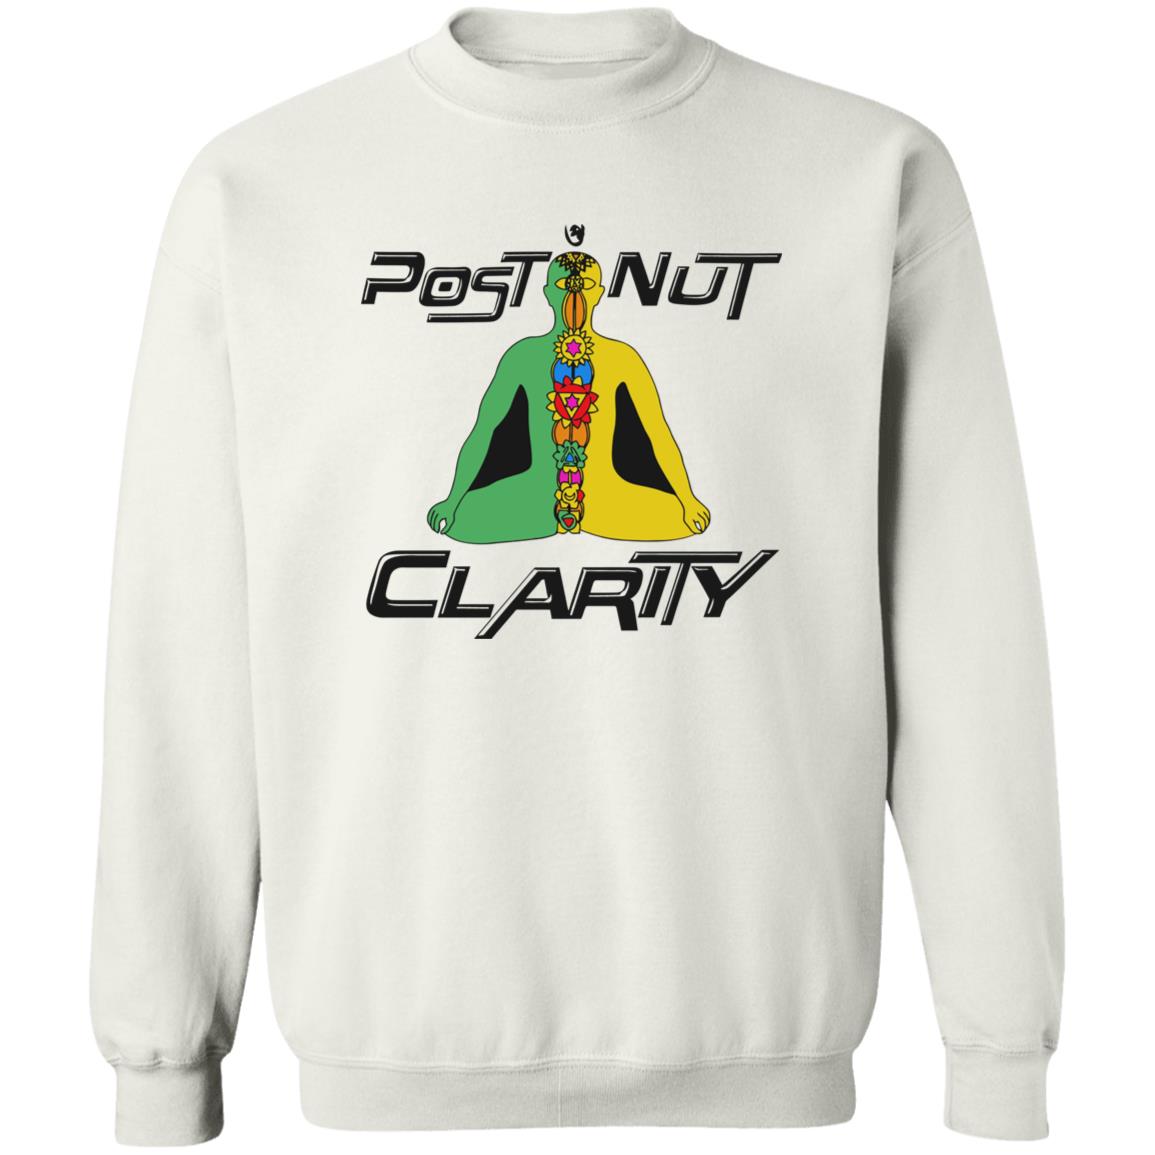 Post Nut Clarity Shirt 1